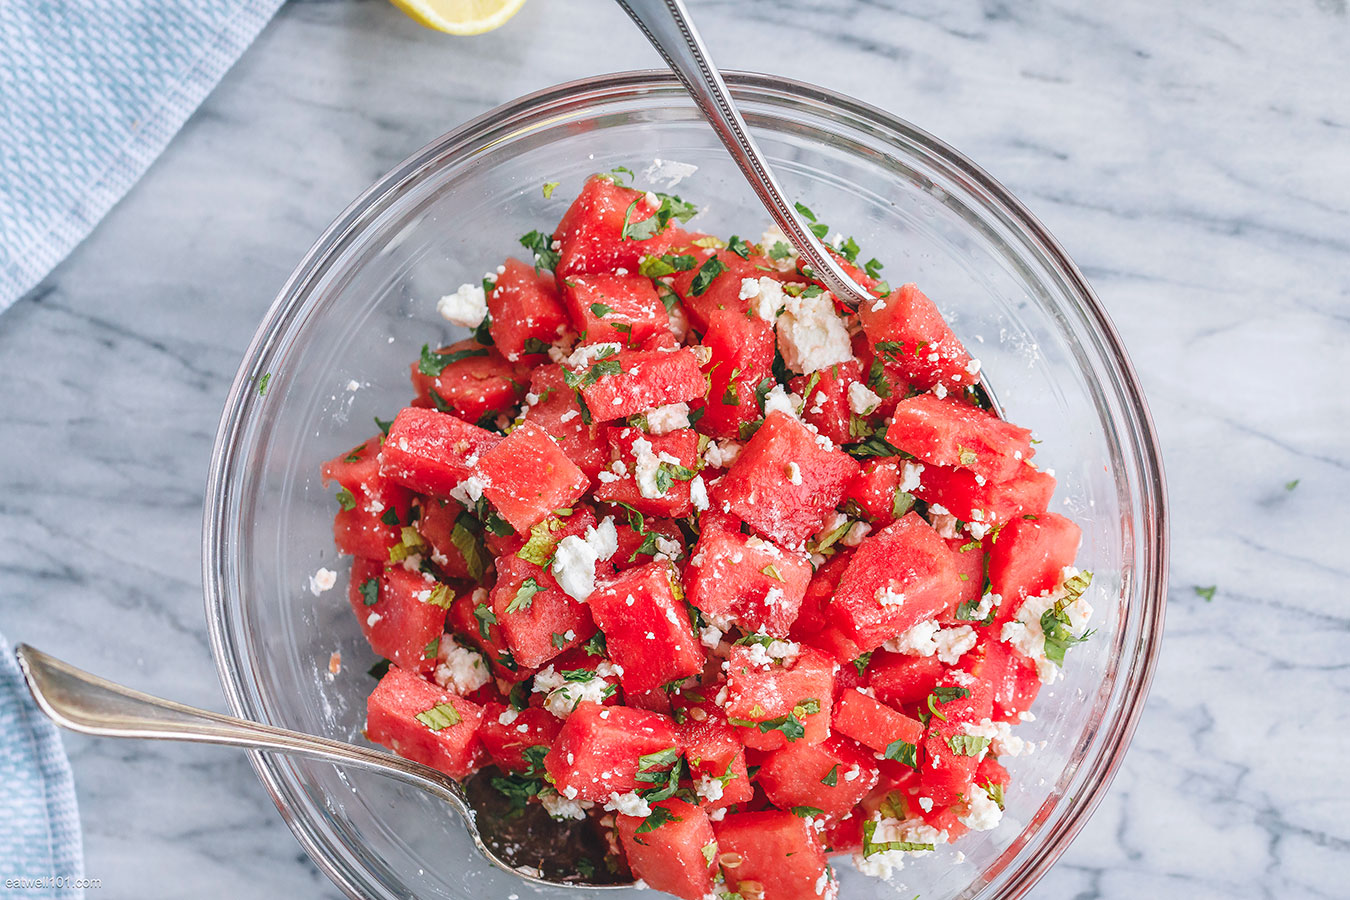 How to Make Watermelon Salad